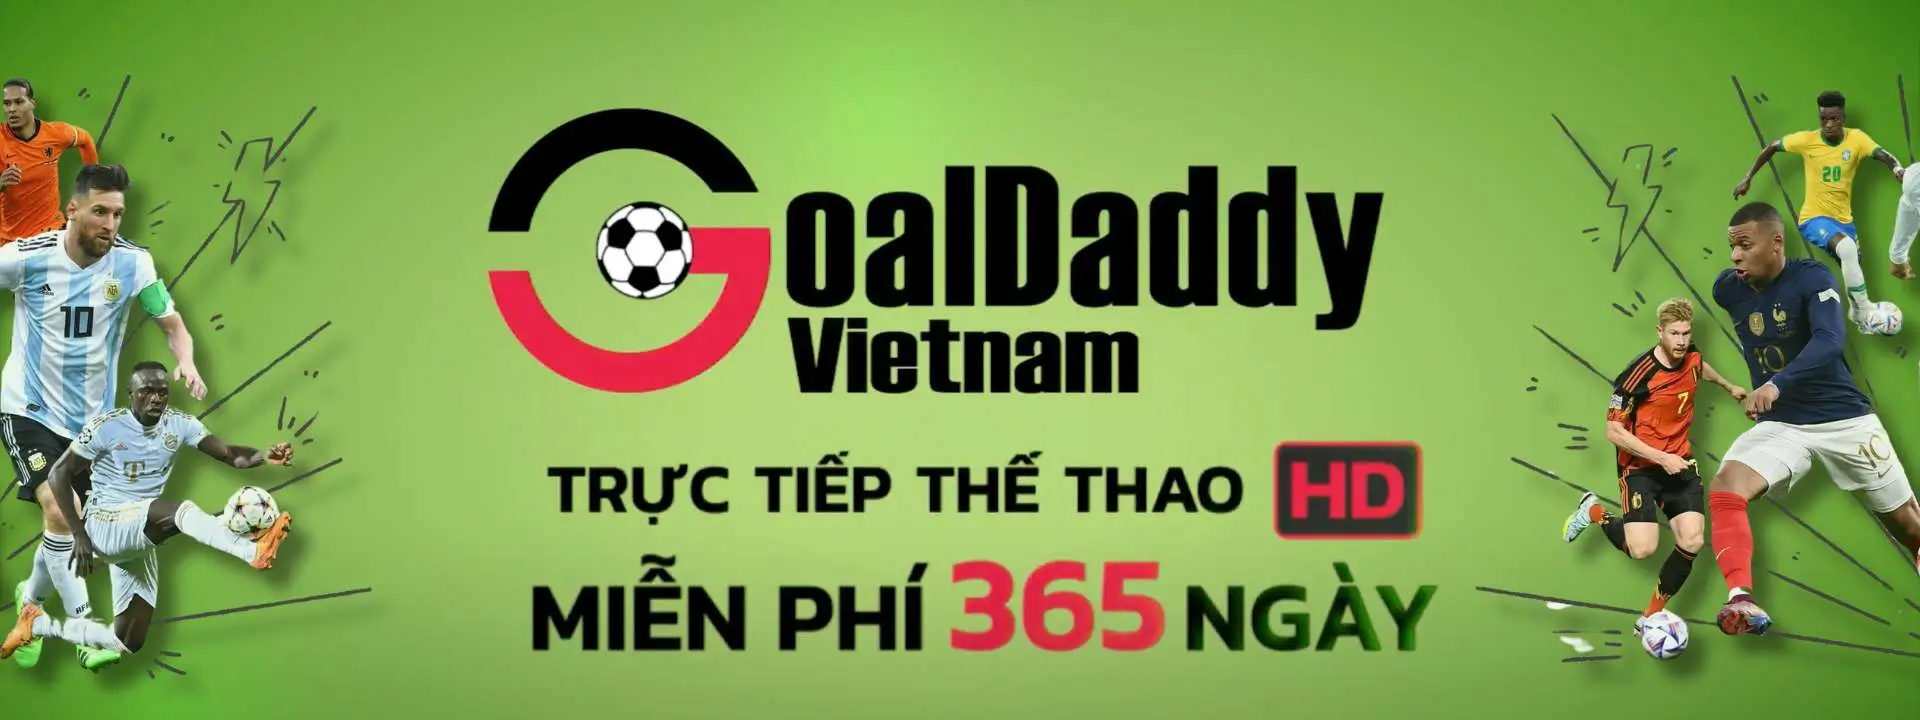 Goaldaddy TV - Trang web phát trực tiếp bóng đá